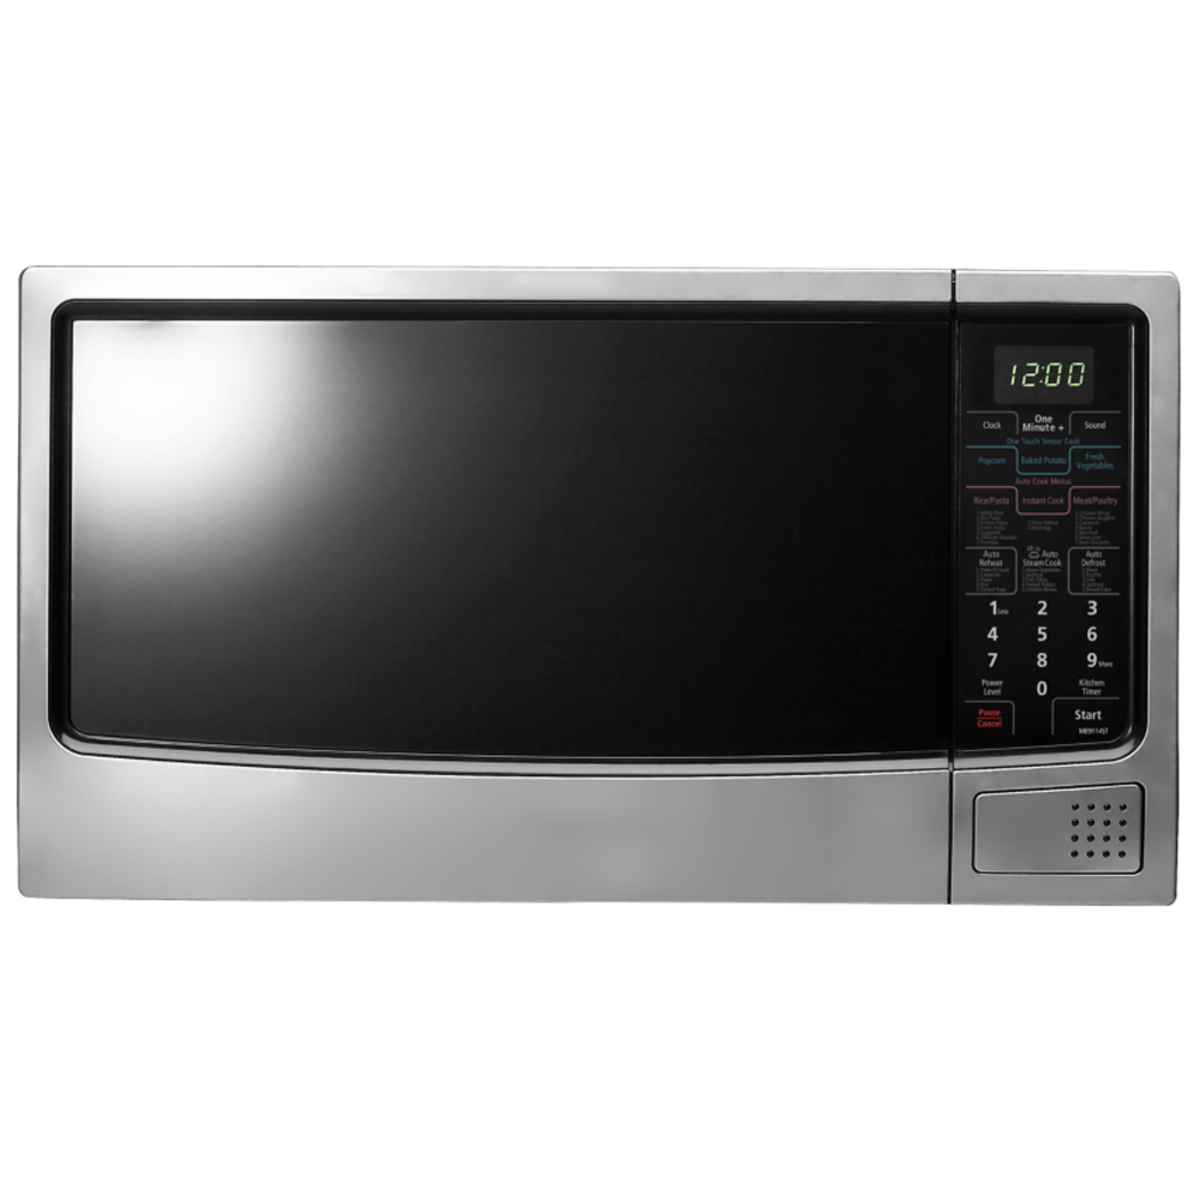 Samsung Microwave Oven ME9114ST 32 Ltr